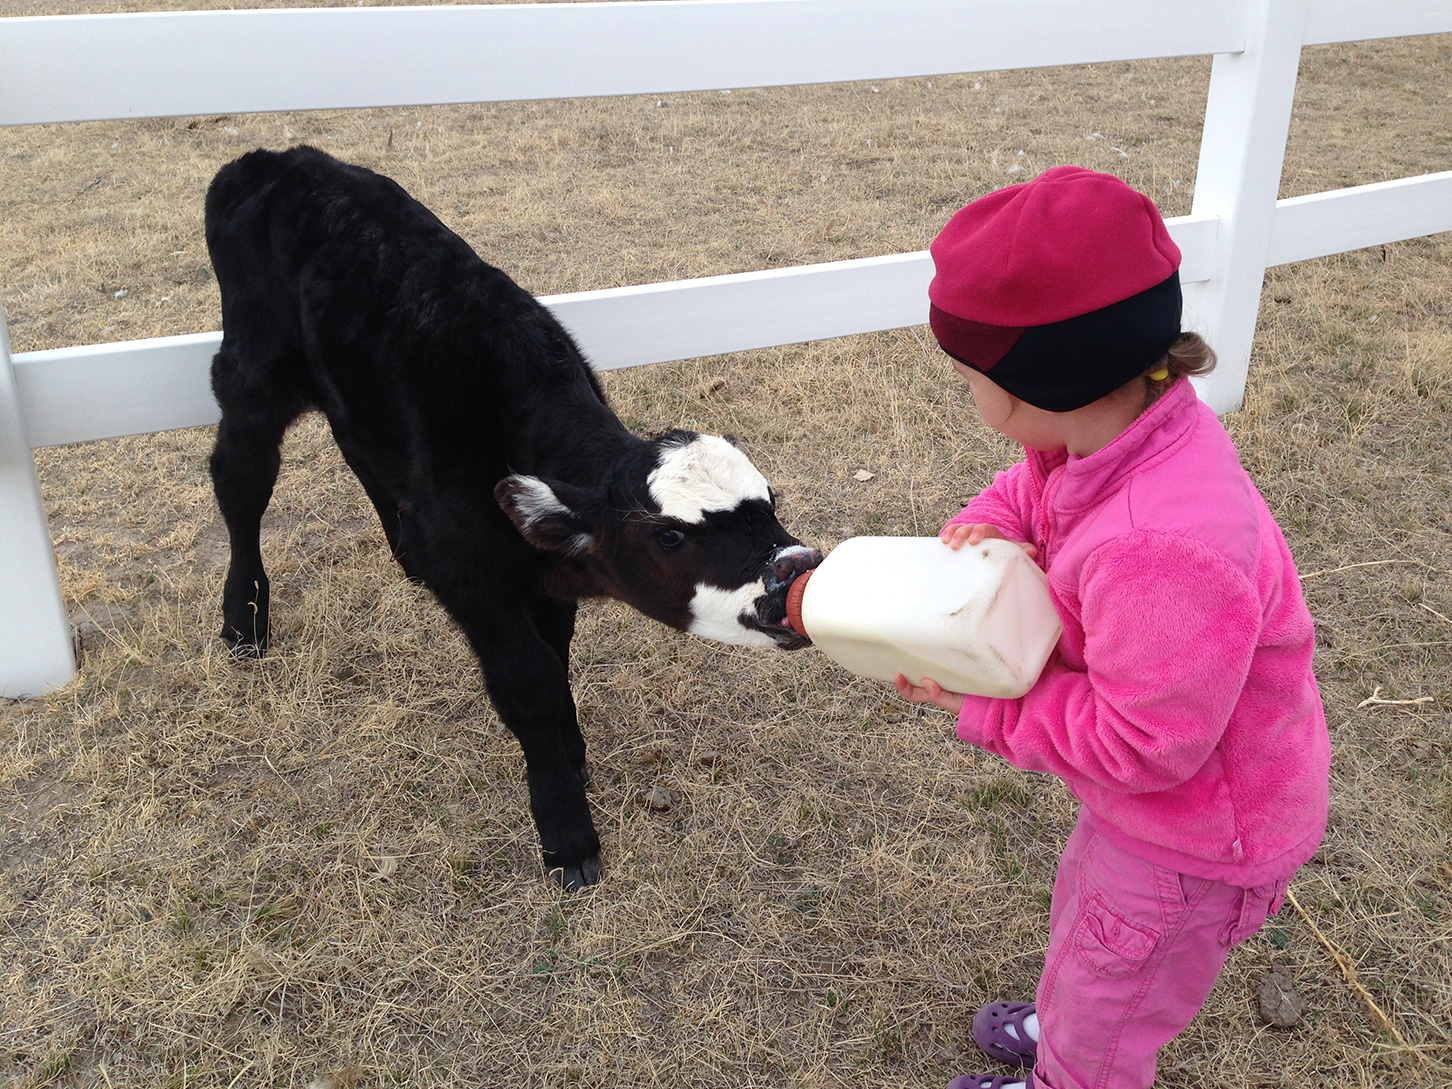 Little girl dress in pink feeding a calf a bottle of milk